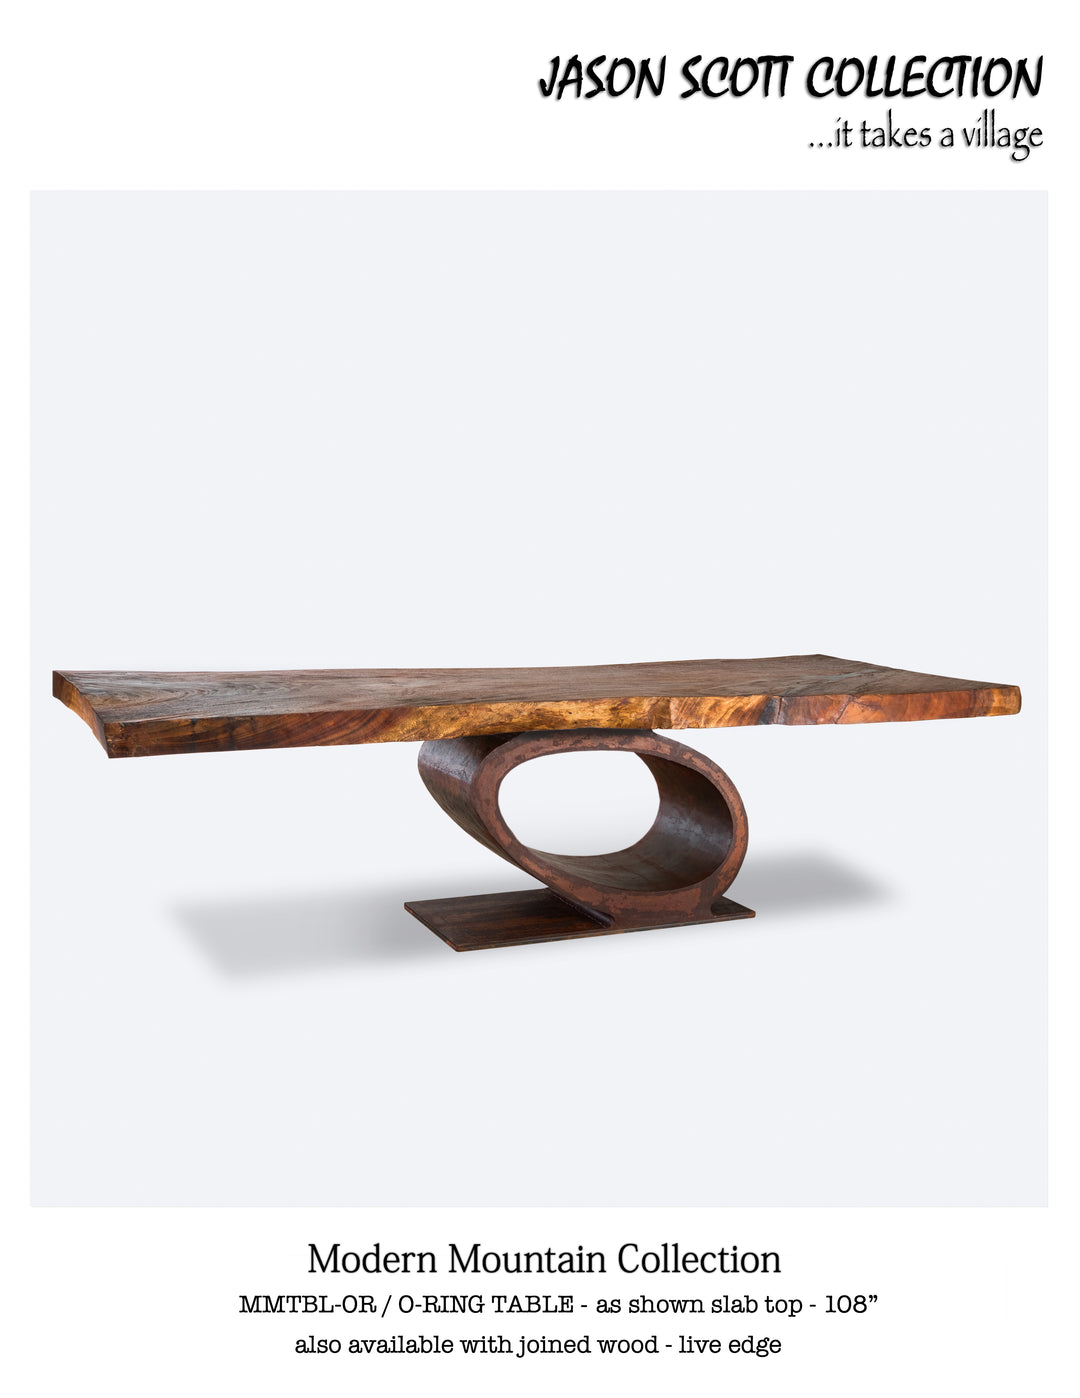 O-Ring Table (Modern Mountain Collection)